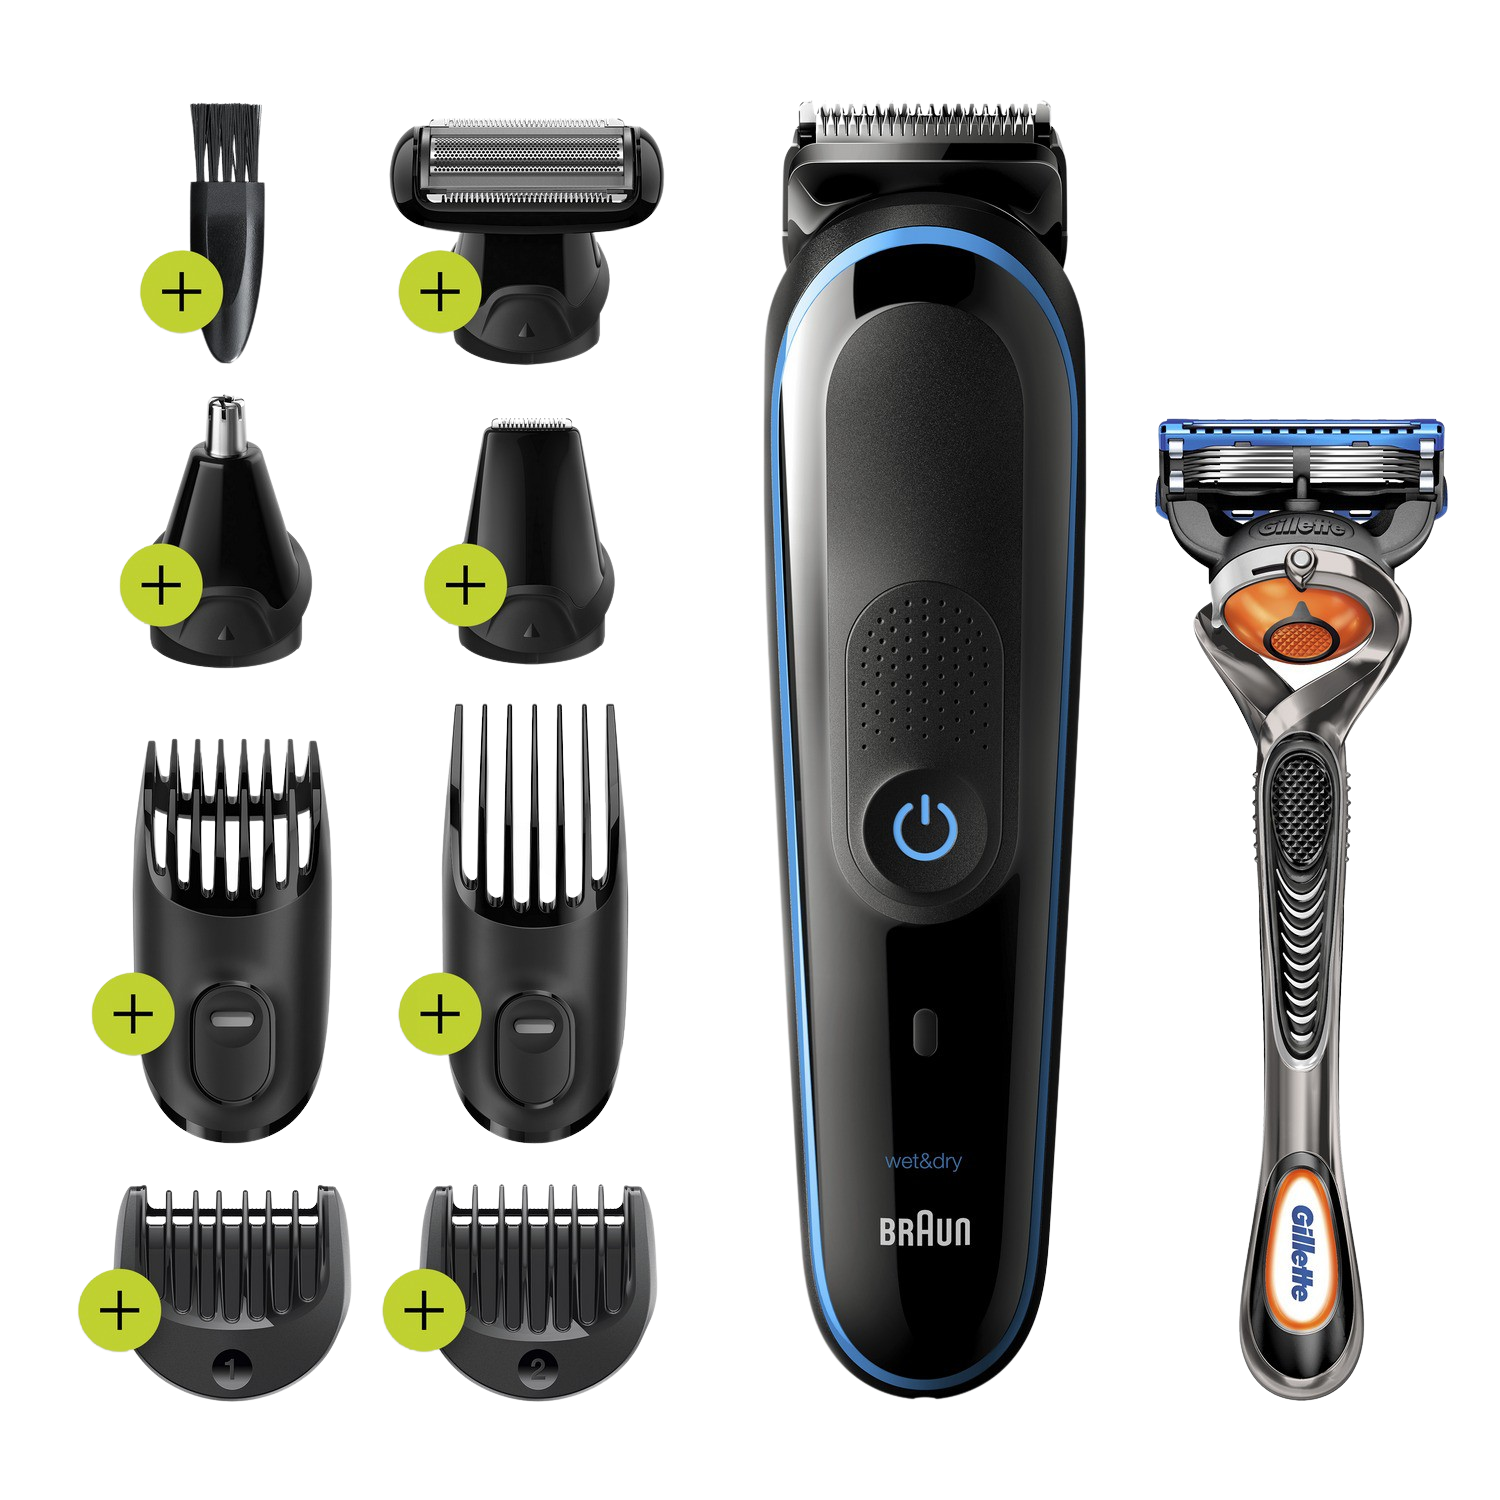 Recortadora Braun Mgk5280 9 en 1 barba cortar pelo depiladora corporal hombre 5280 negroazul afeitadora para y cuerpo autonomía 100 minutos 13 accesorios azul 81705166 7